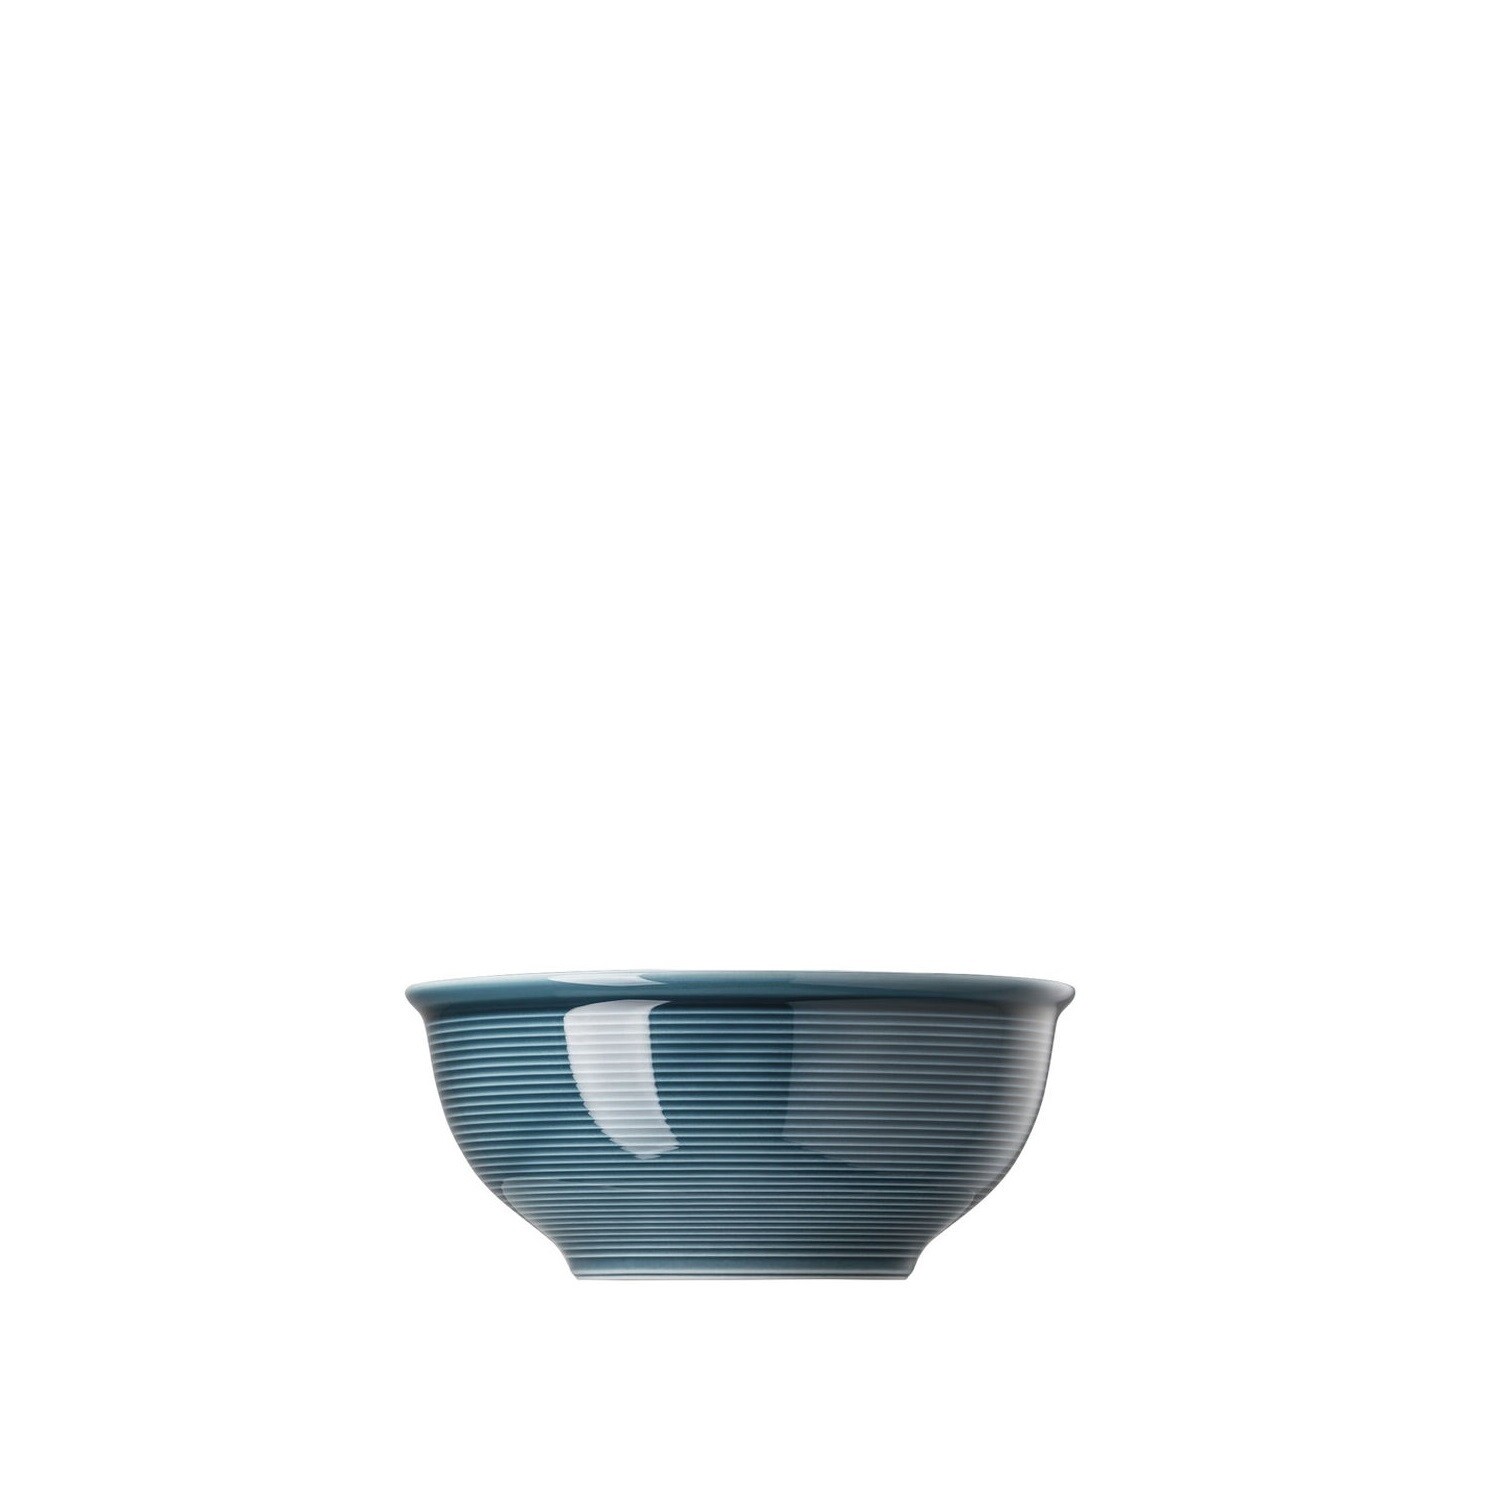 THOMAS 'trend' bowl 16cm night blue  PROMO 21,90 -20%